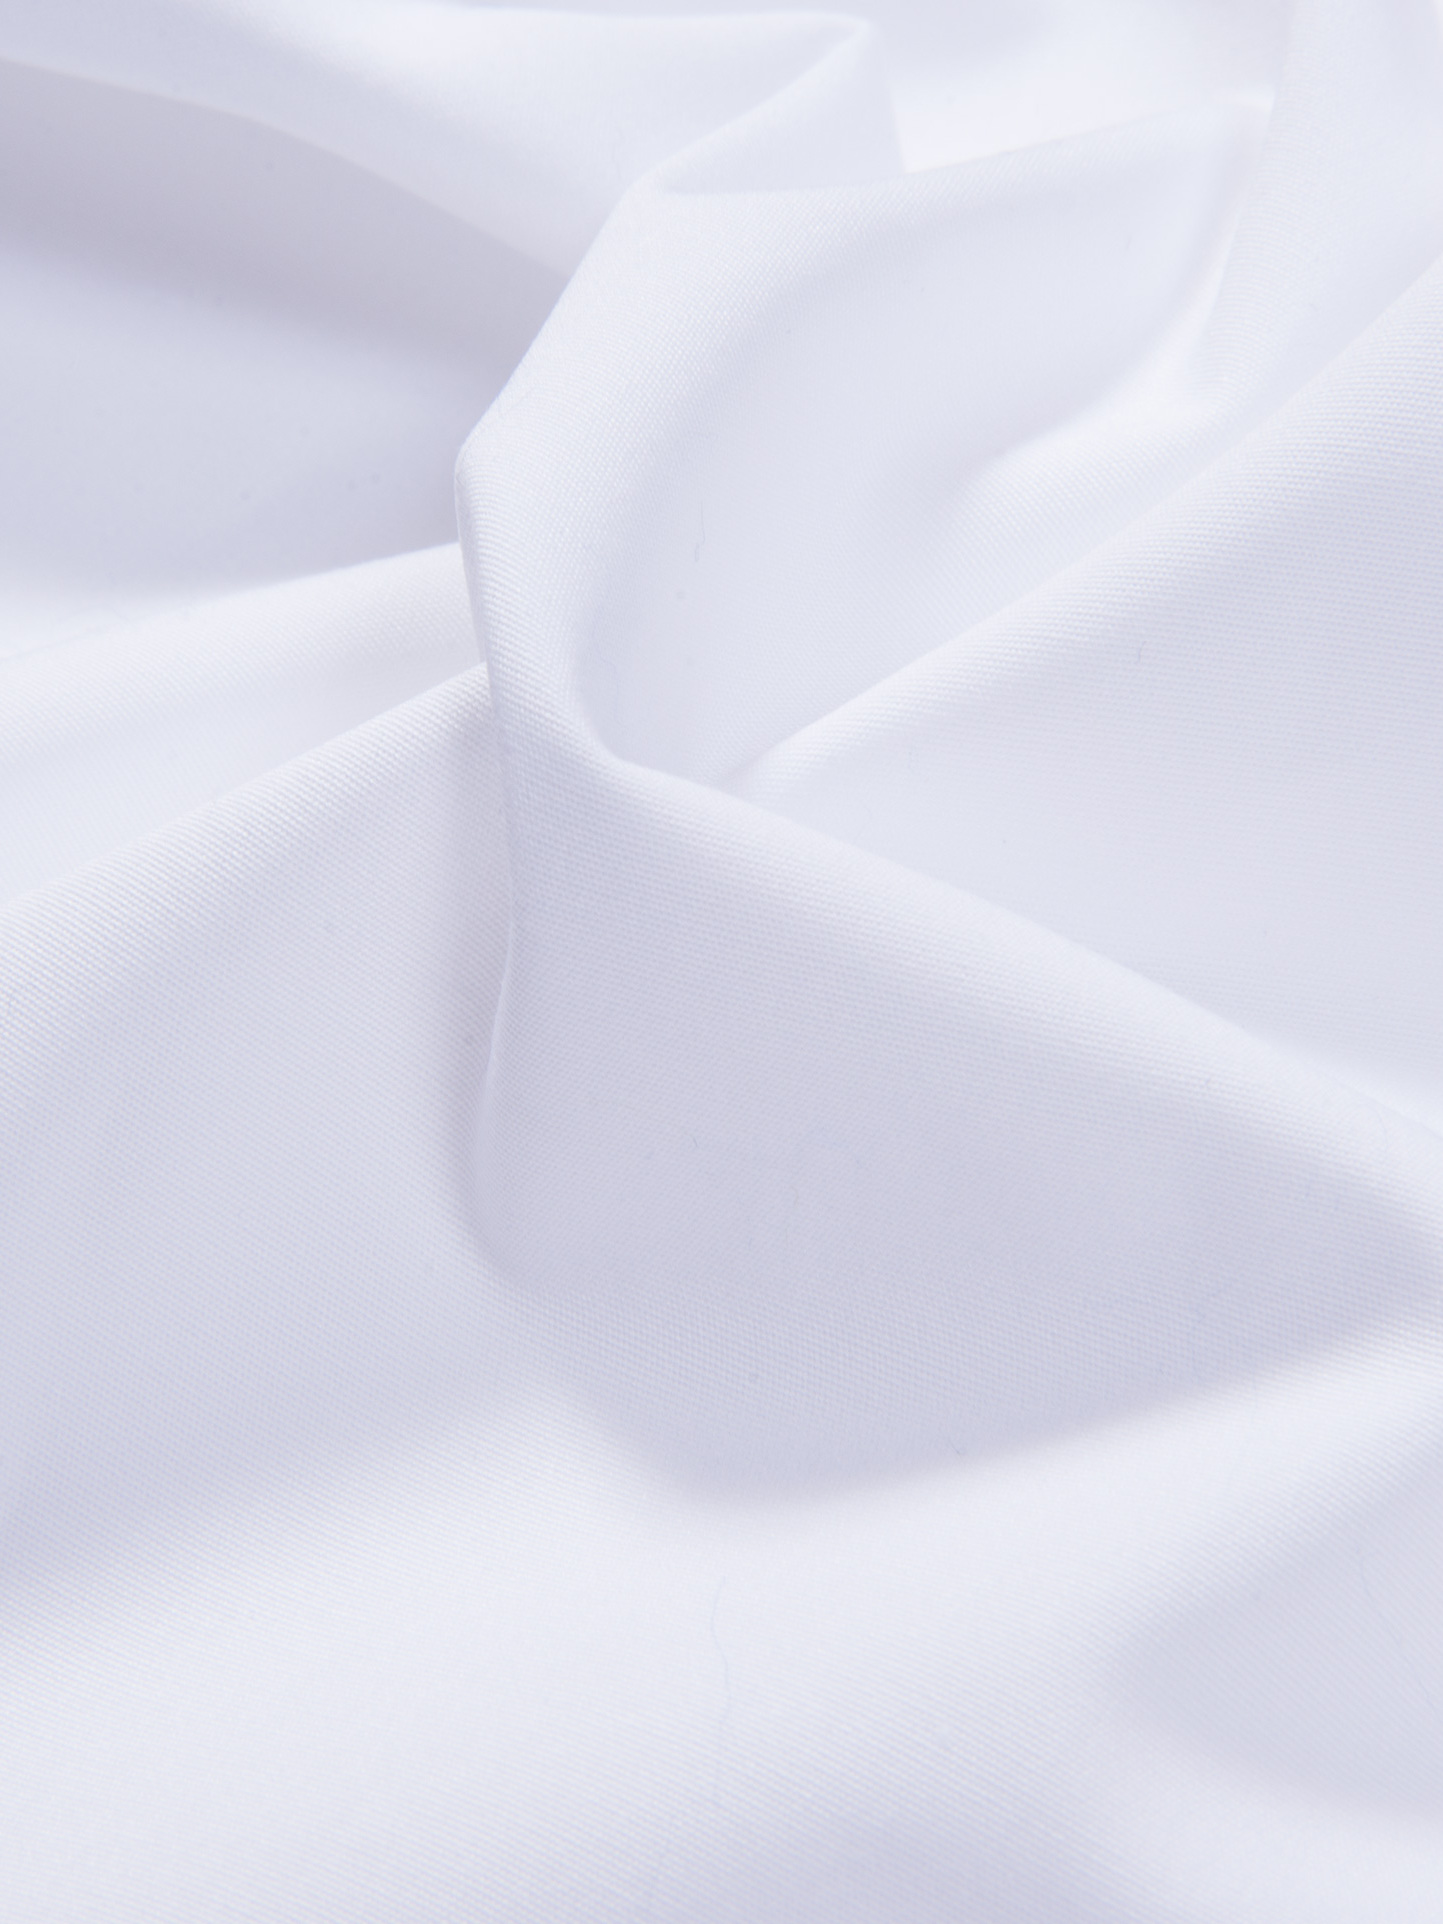 DJA Sea Island White Broadcloth Shirts by Proper Cloth